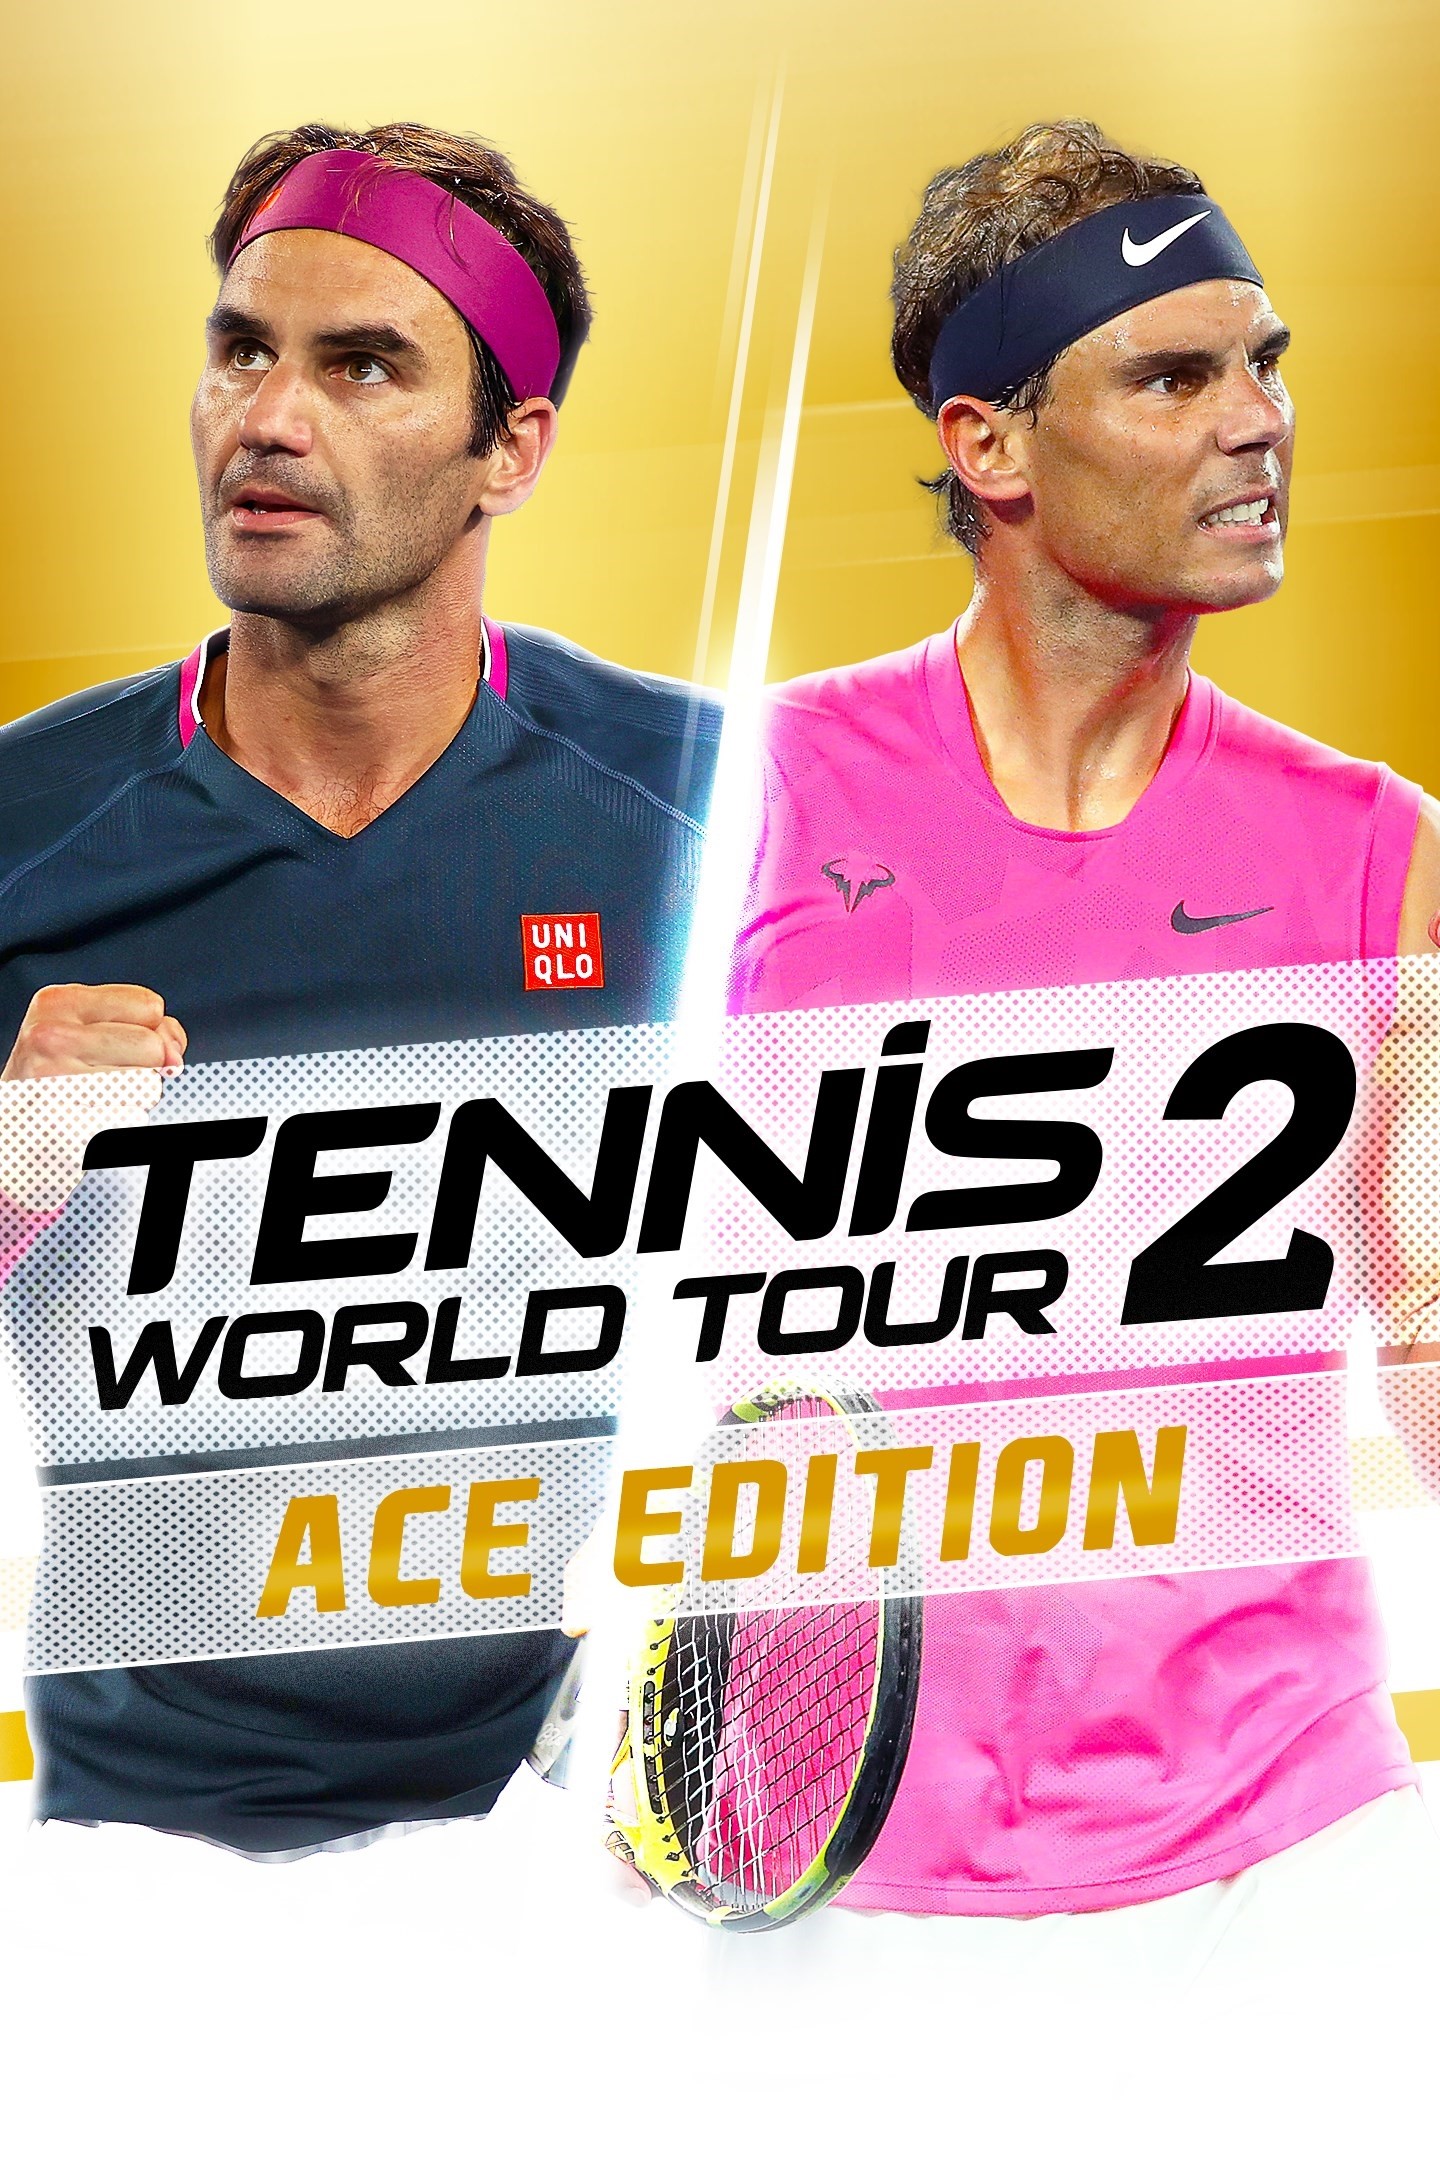 Tennis World Tour 2. Ace Edition [PC, Цифровая версия] (Цифровая версия)